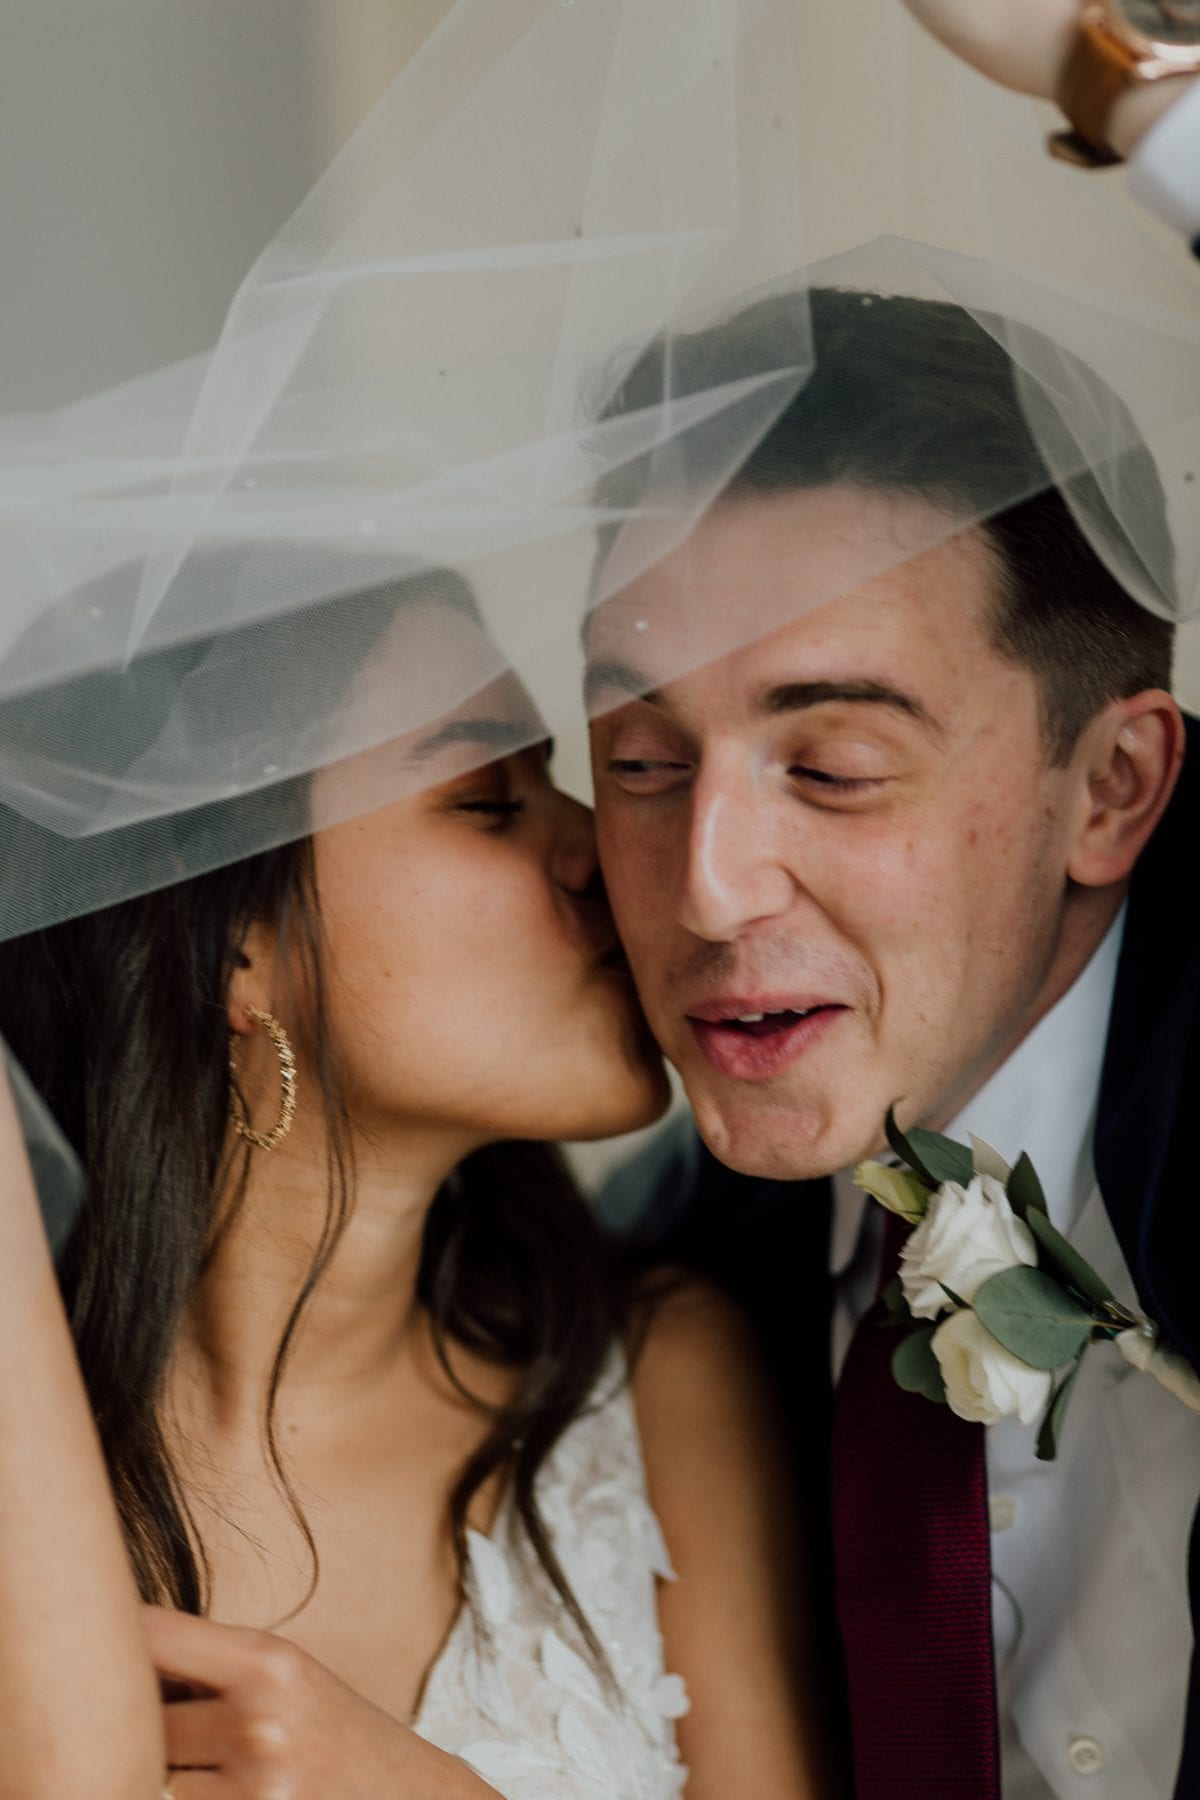 Bride kisses groom on cheek